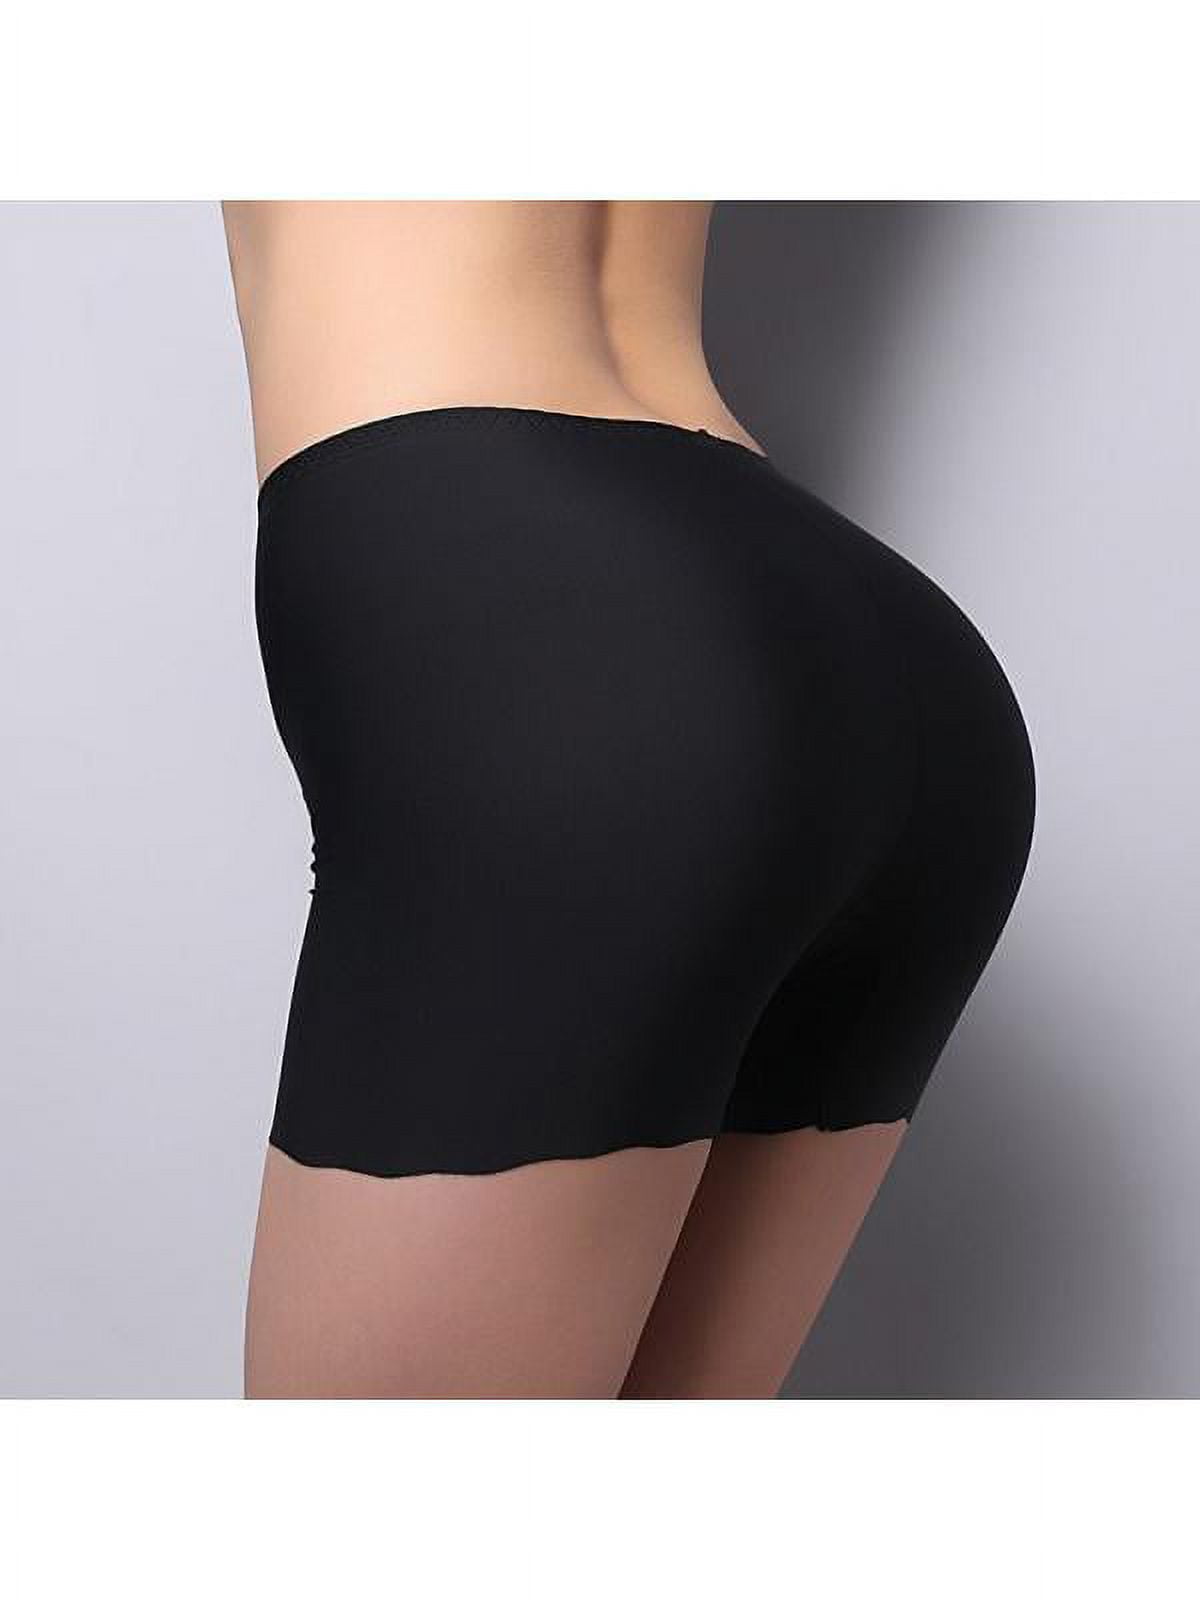 brandie fitzgerald recommends Panties Under Skirt